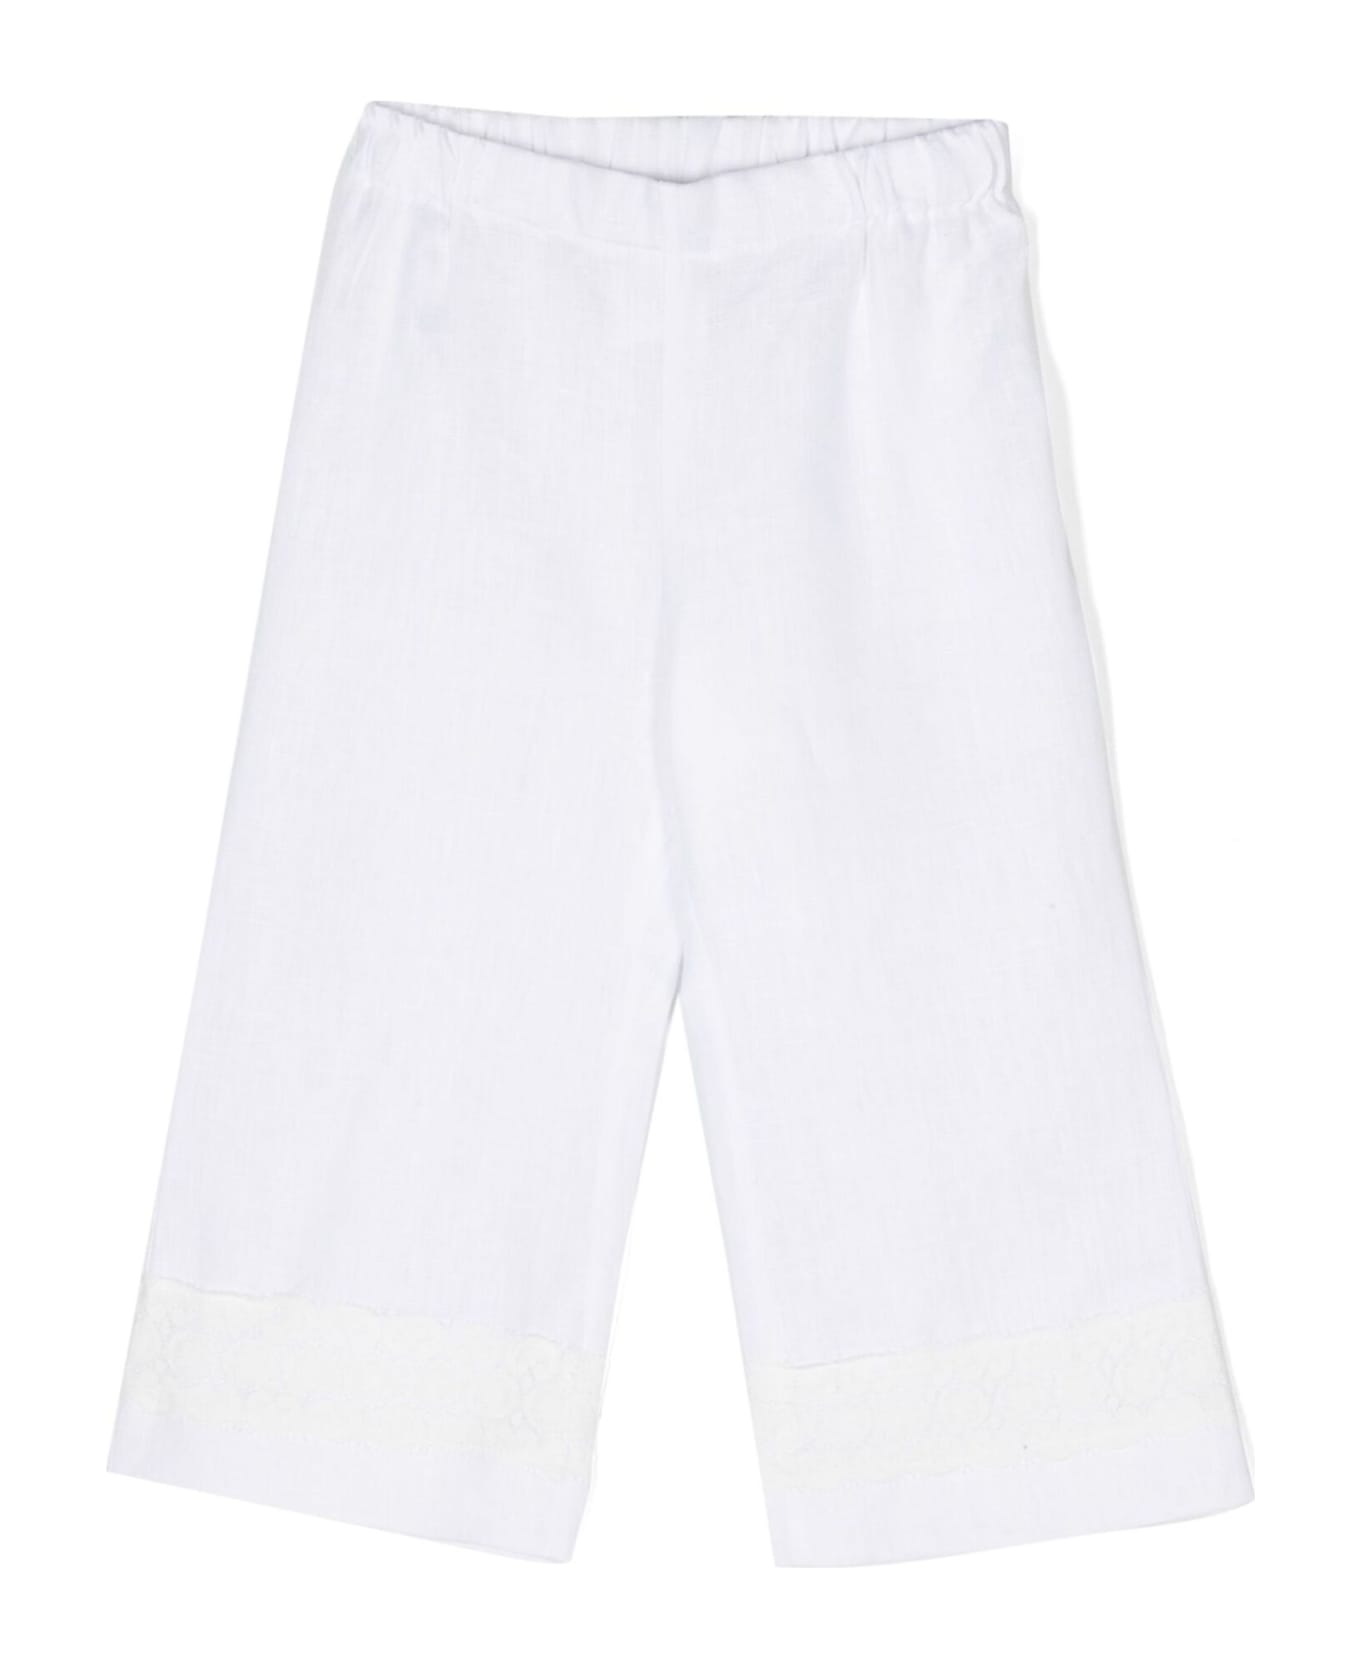 La stupenderia Trousers White - White ボトムス